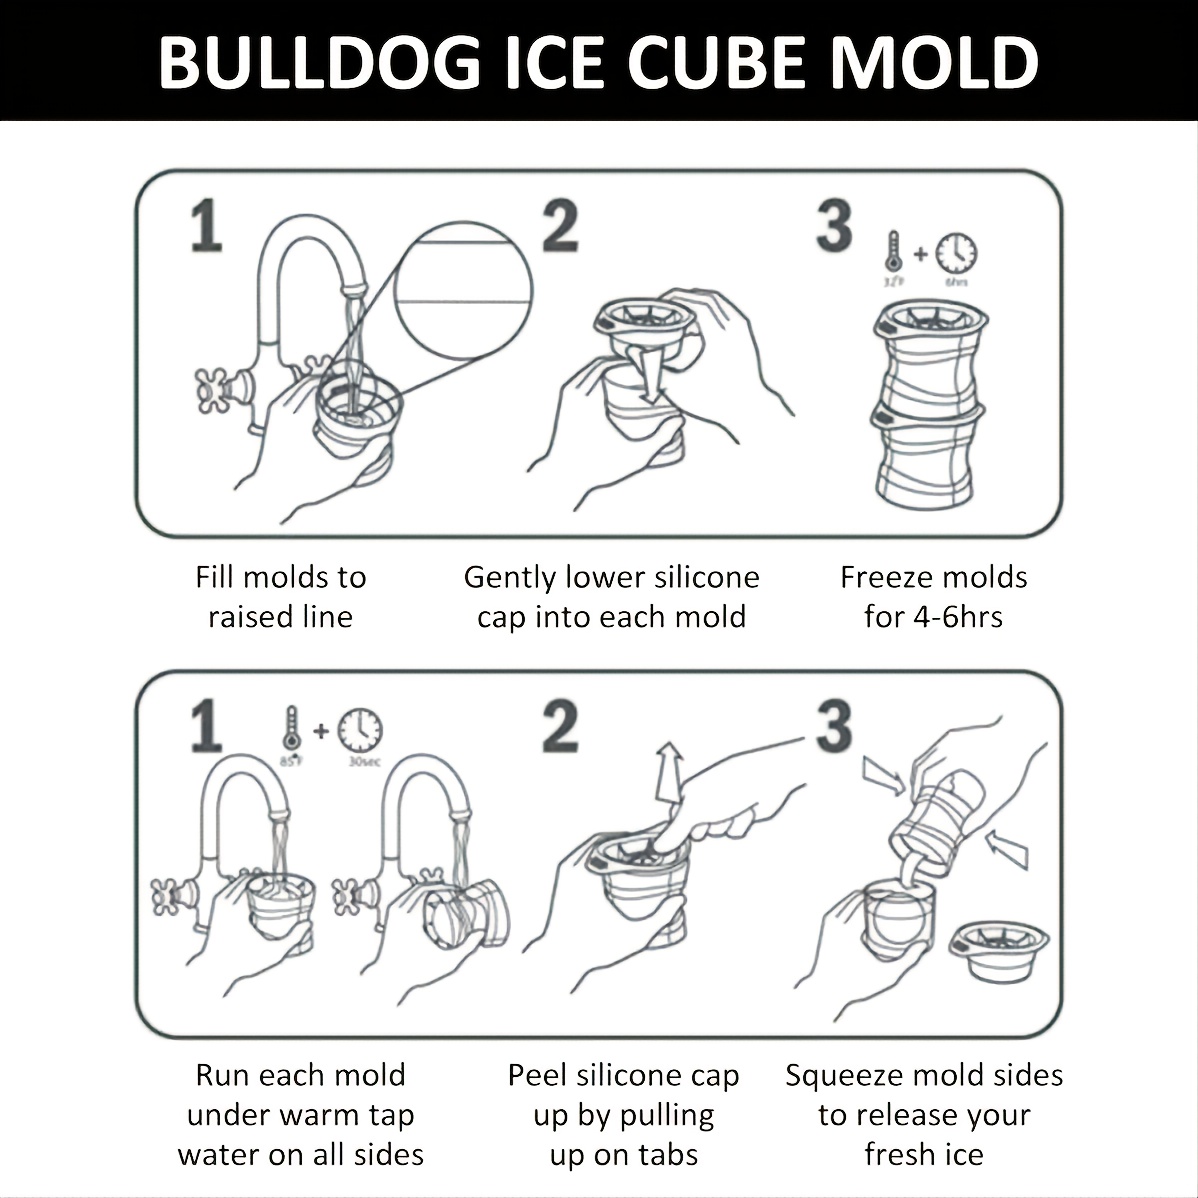 1pc, Silicone Ice Cube Tray Bulldog Ice Mold Creative Whiskey Ice